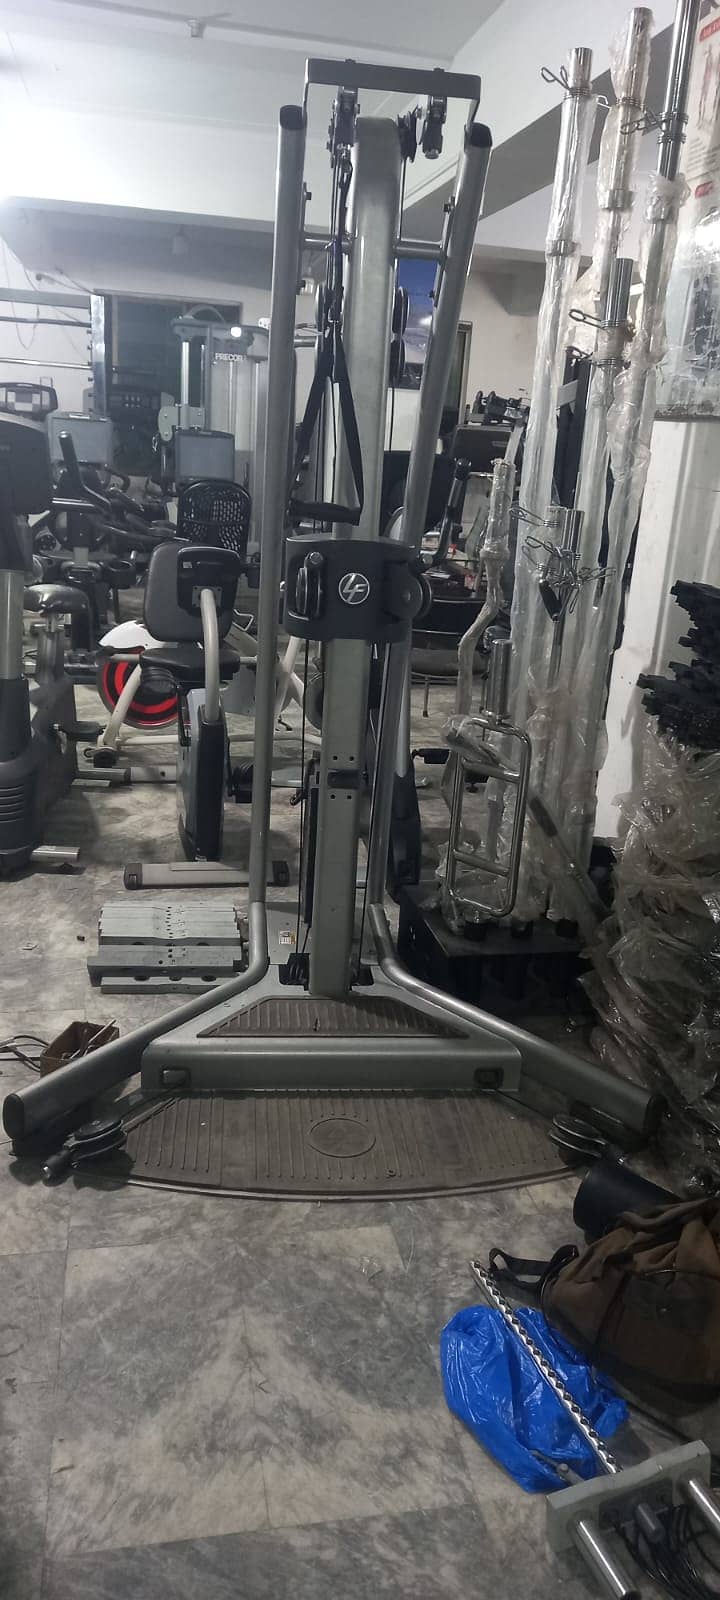 multi functional machine dumbbell gym setup treadmill elliptical plate 19